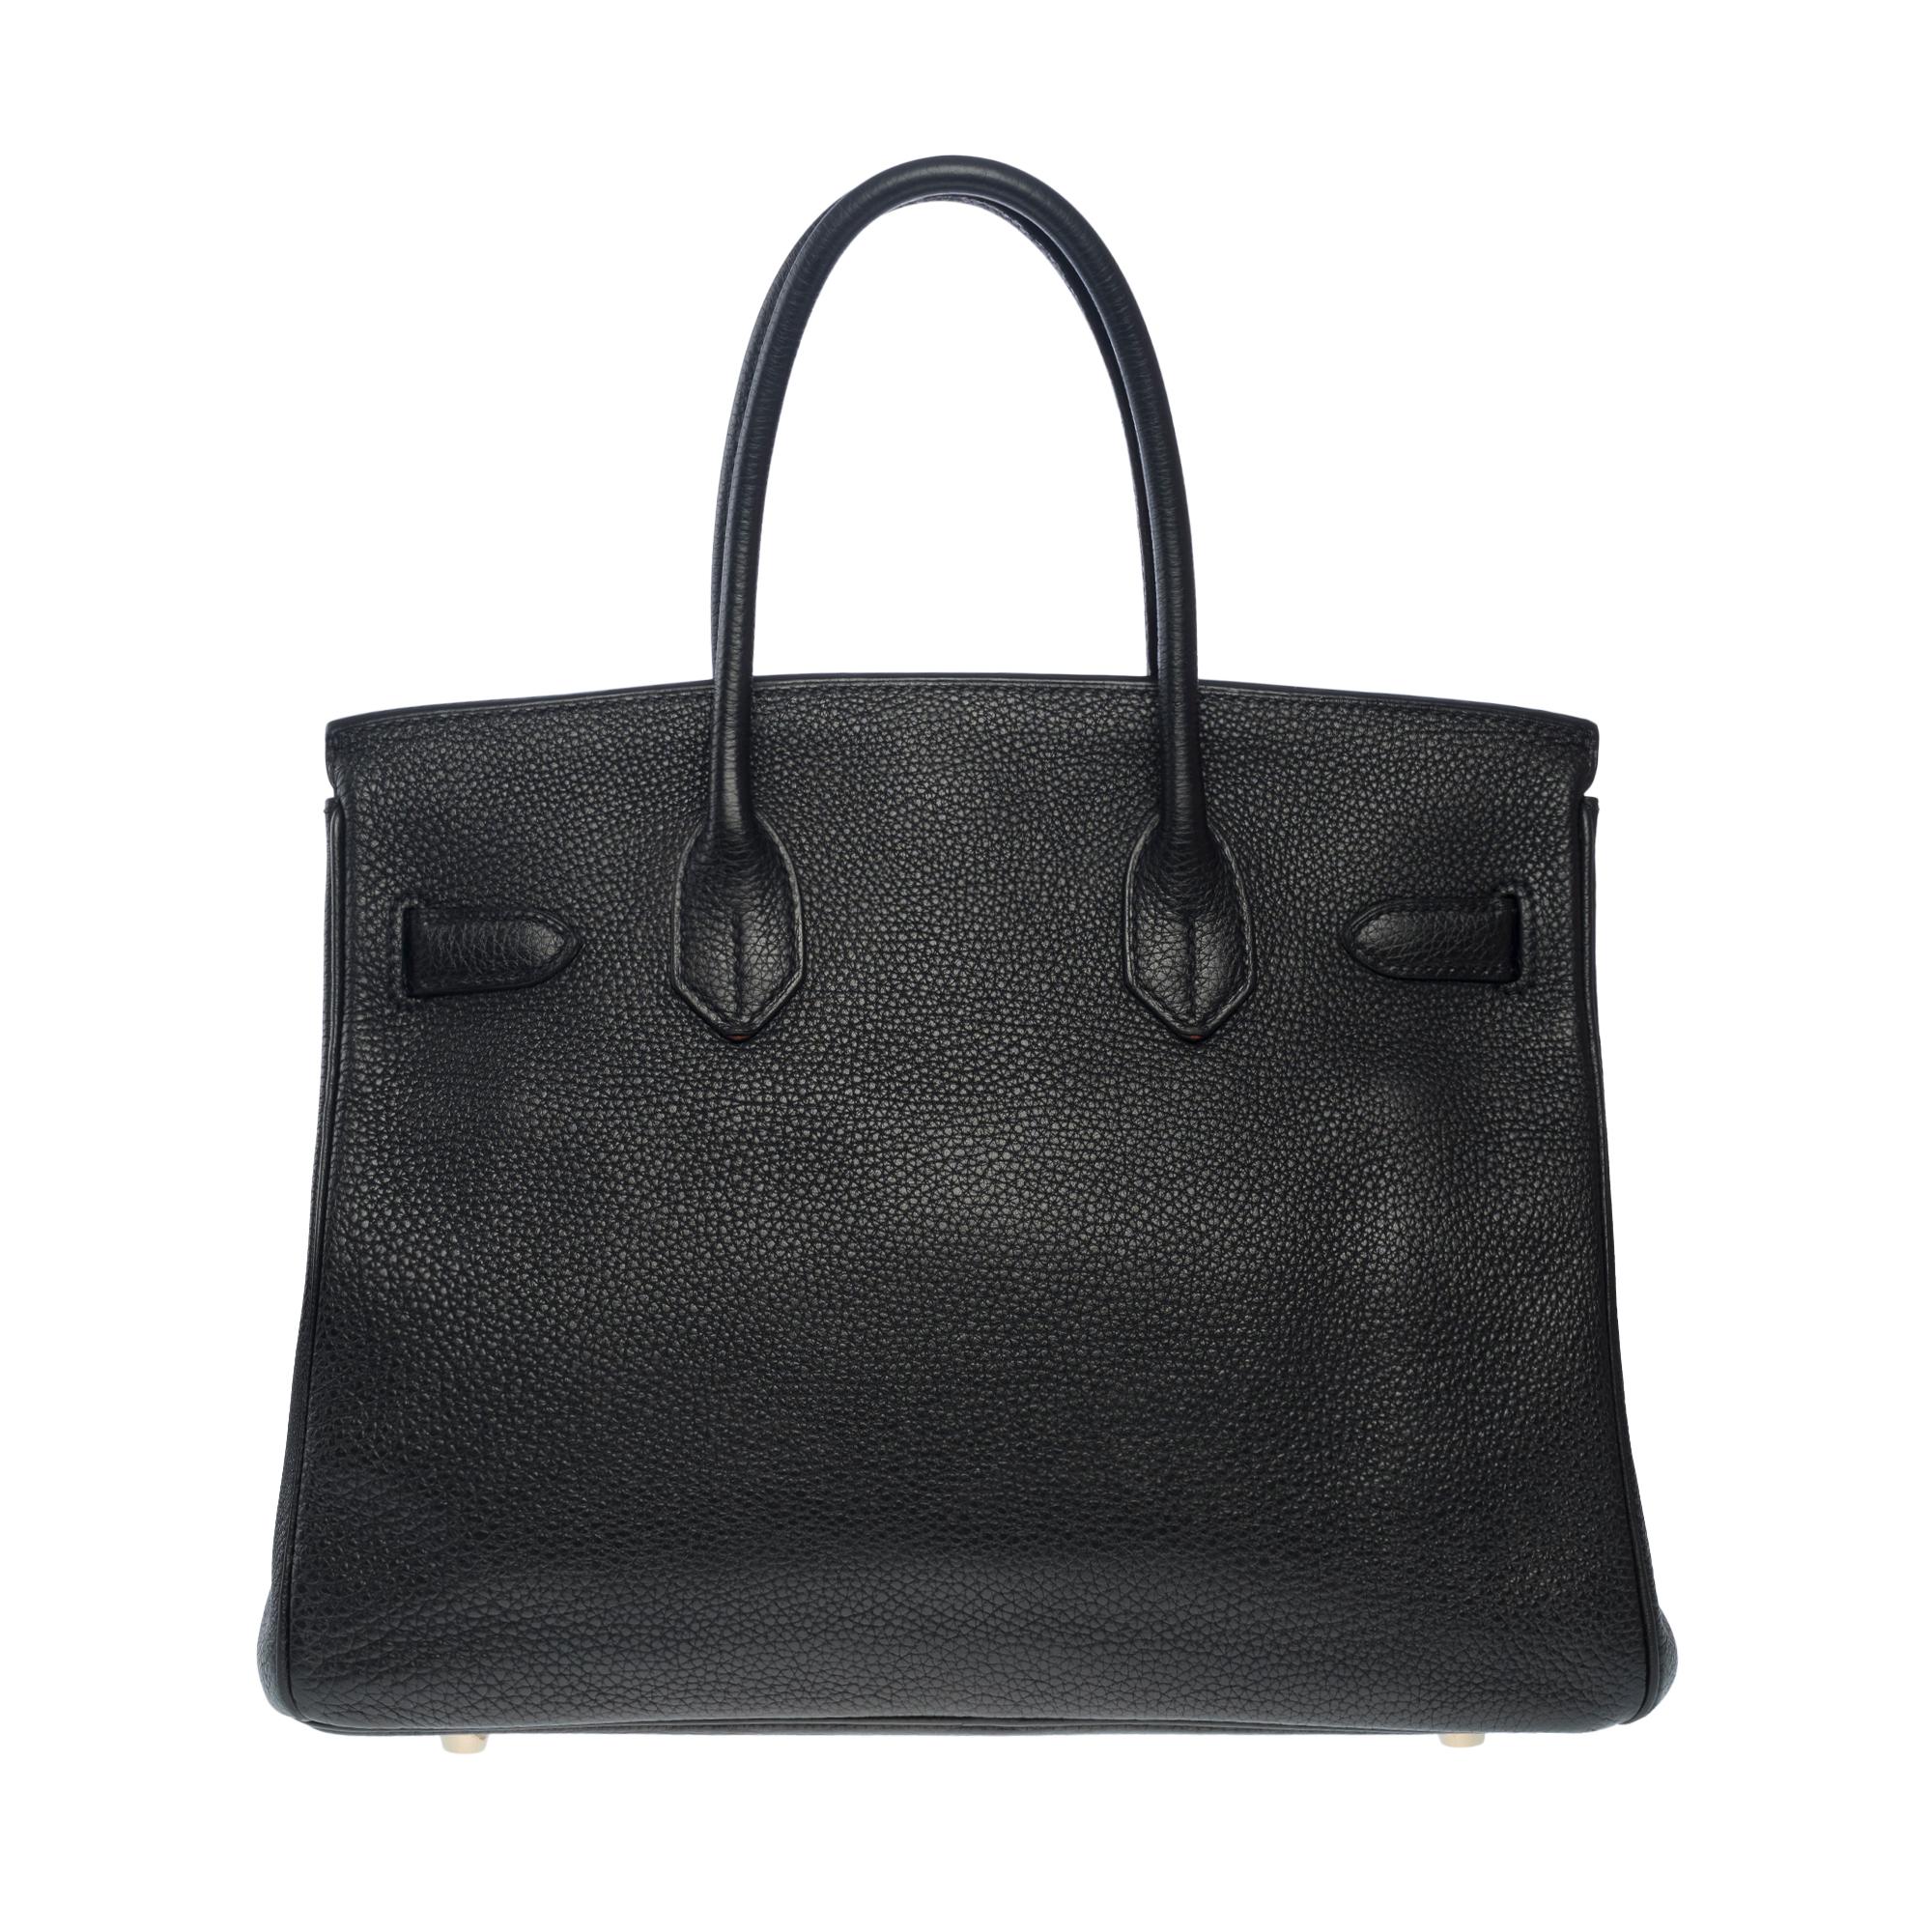 Stunning Hermes Birkin 30 handbag in Black Togo leather, GHW 1